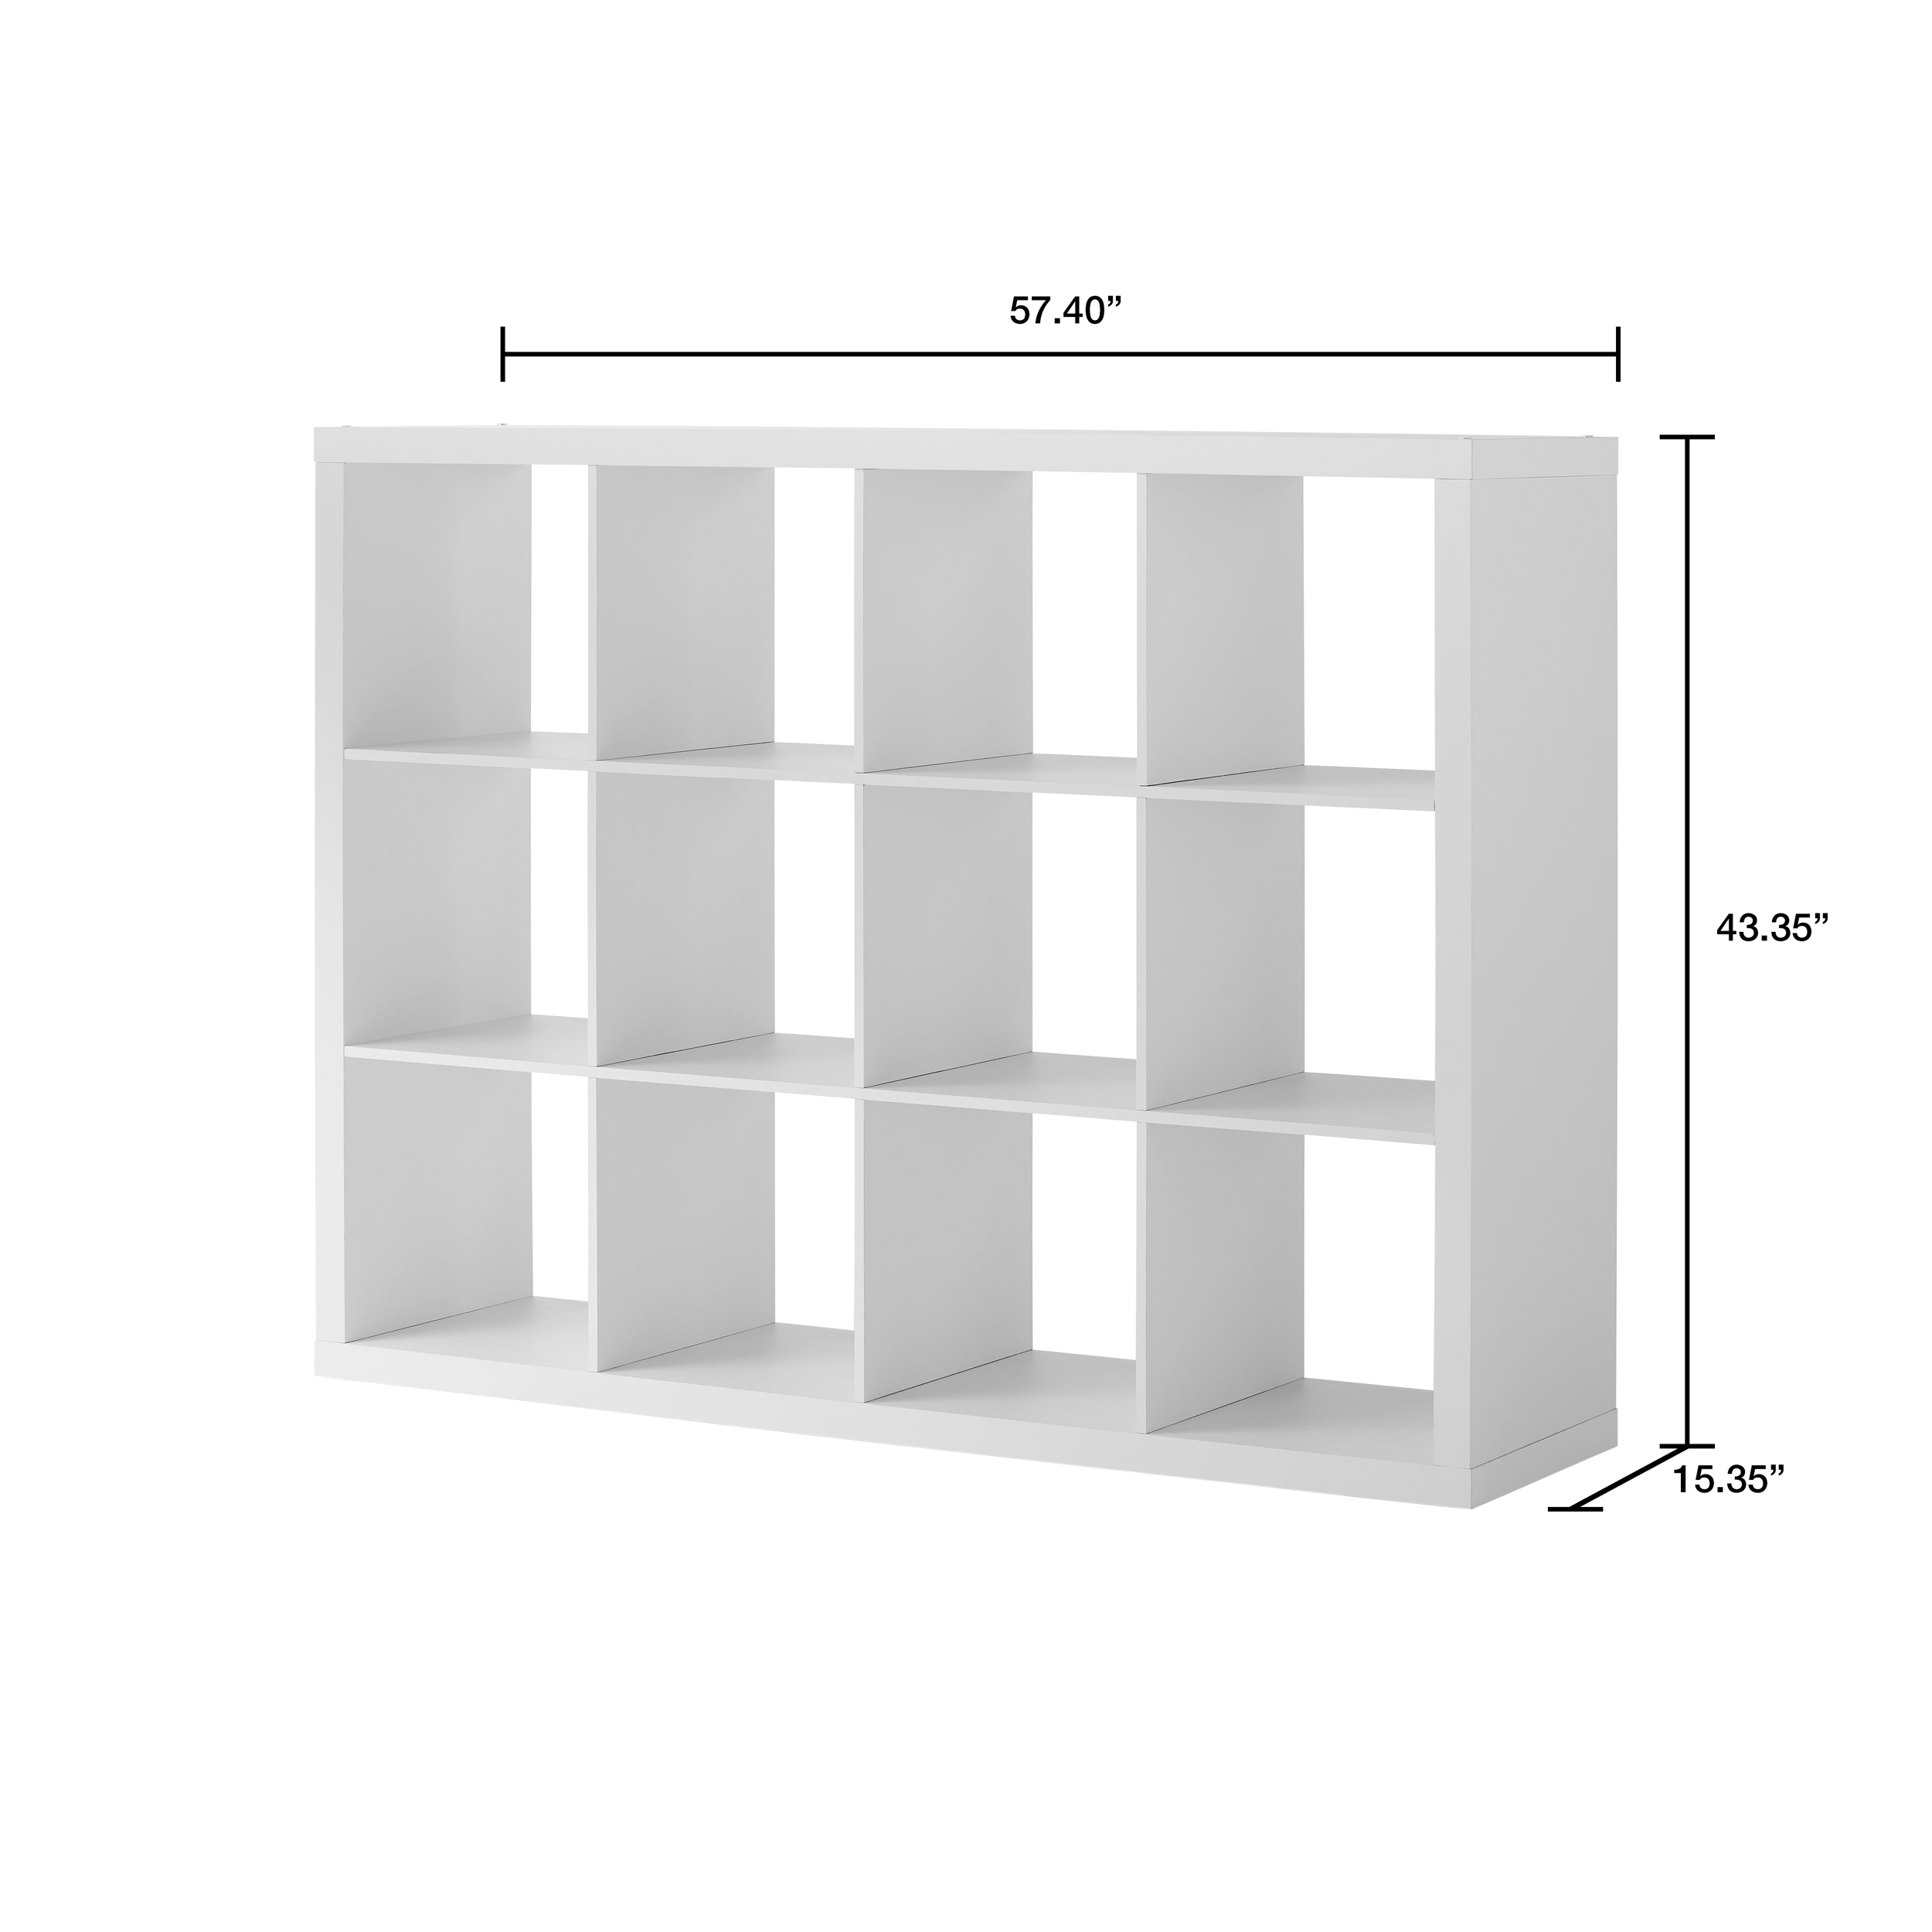 Better Homes & Gardens 12-Cube Storage Organizer, White Texture - image 3 of 6